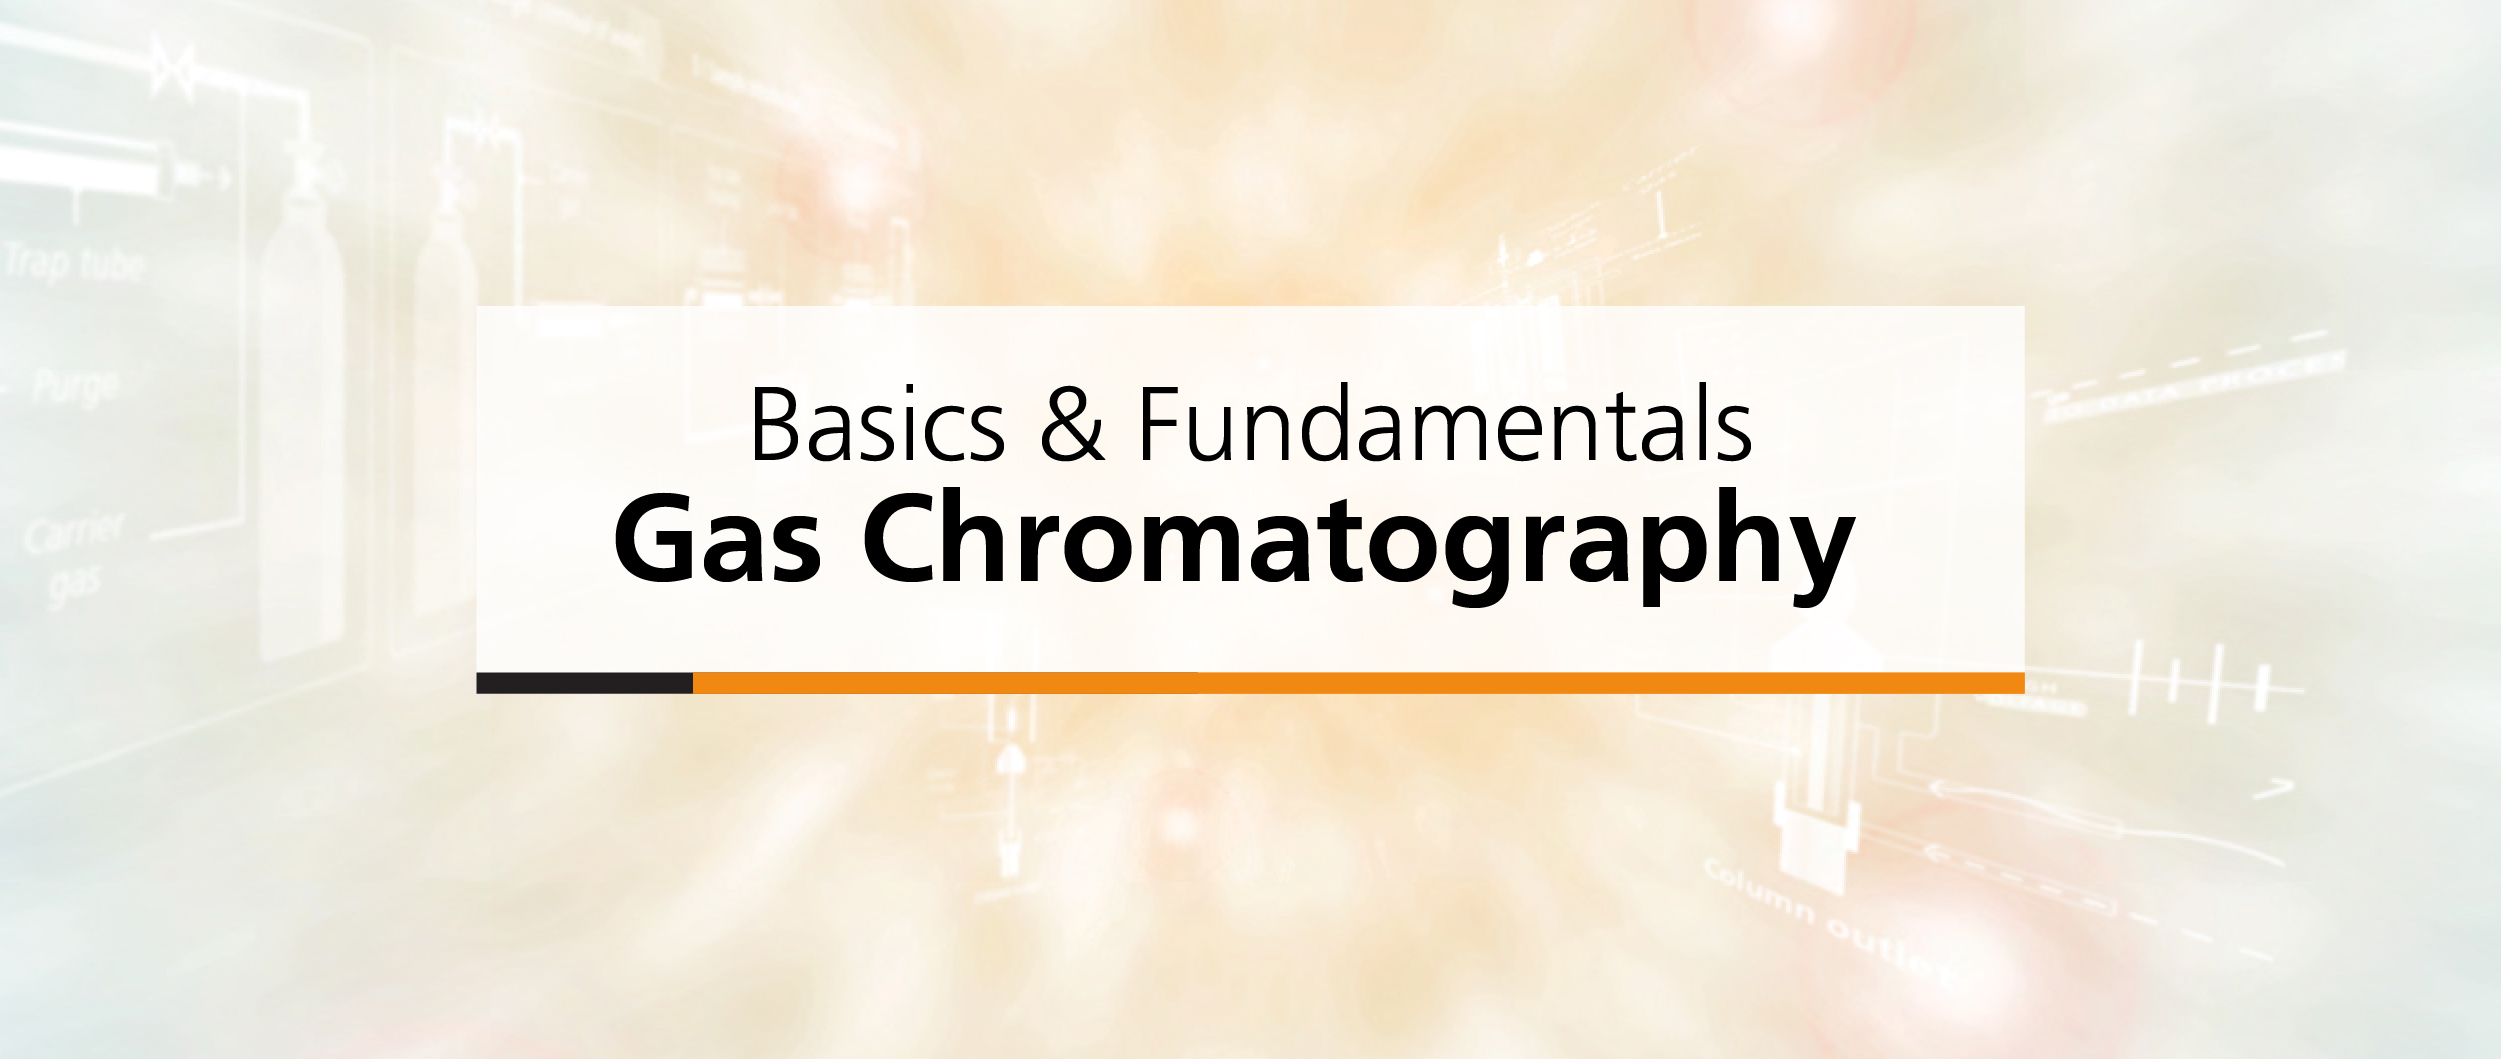 Basics & Fundamentals Gas Chromatography